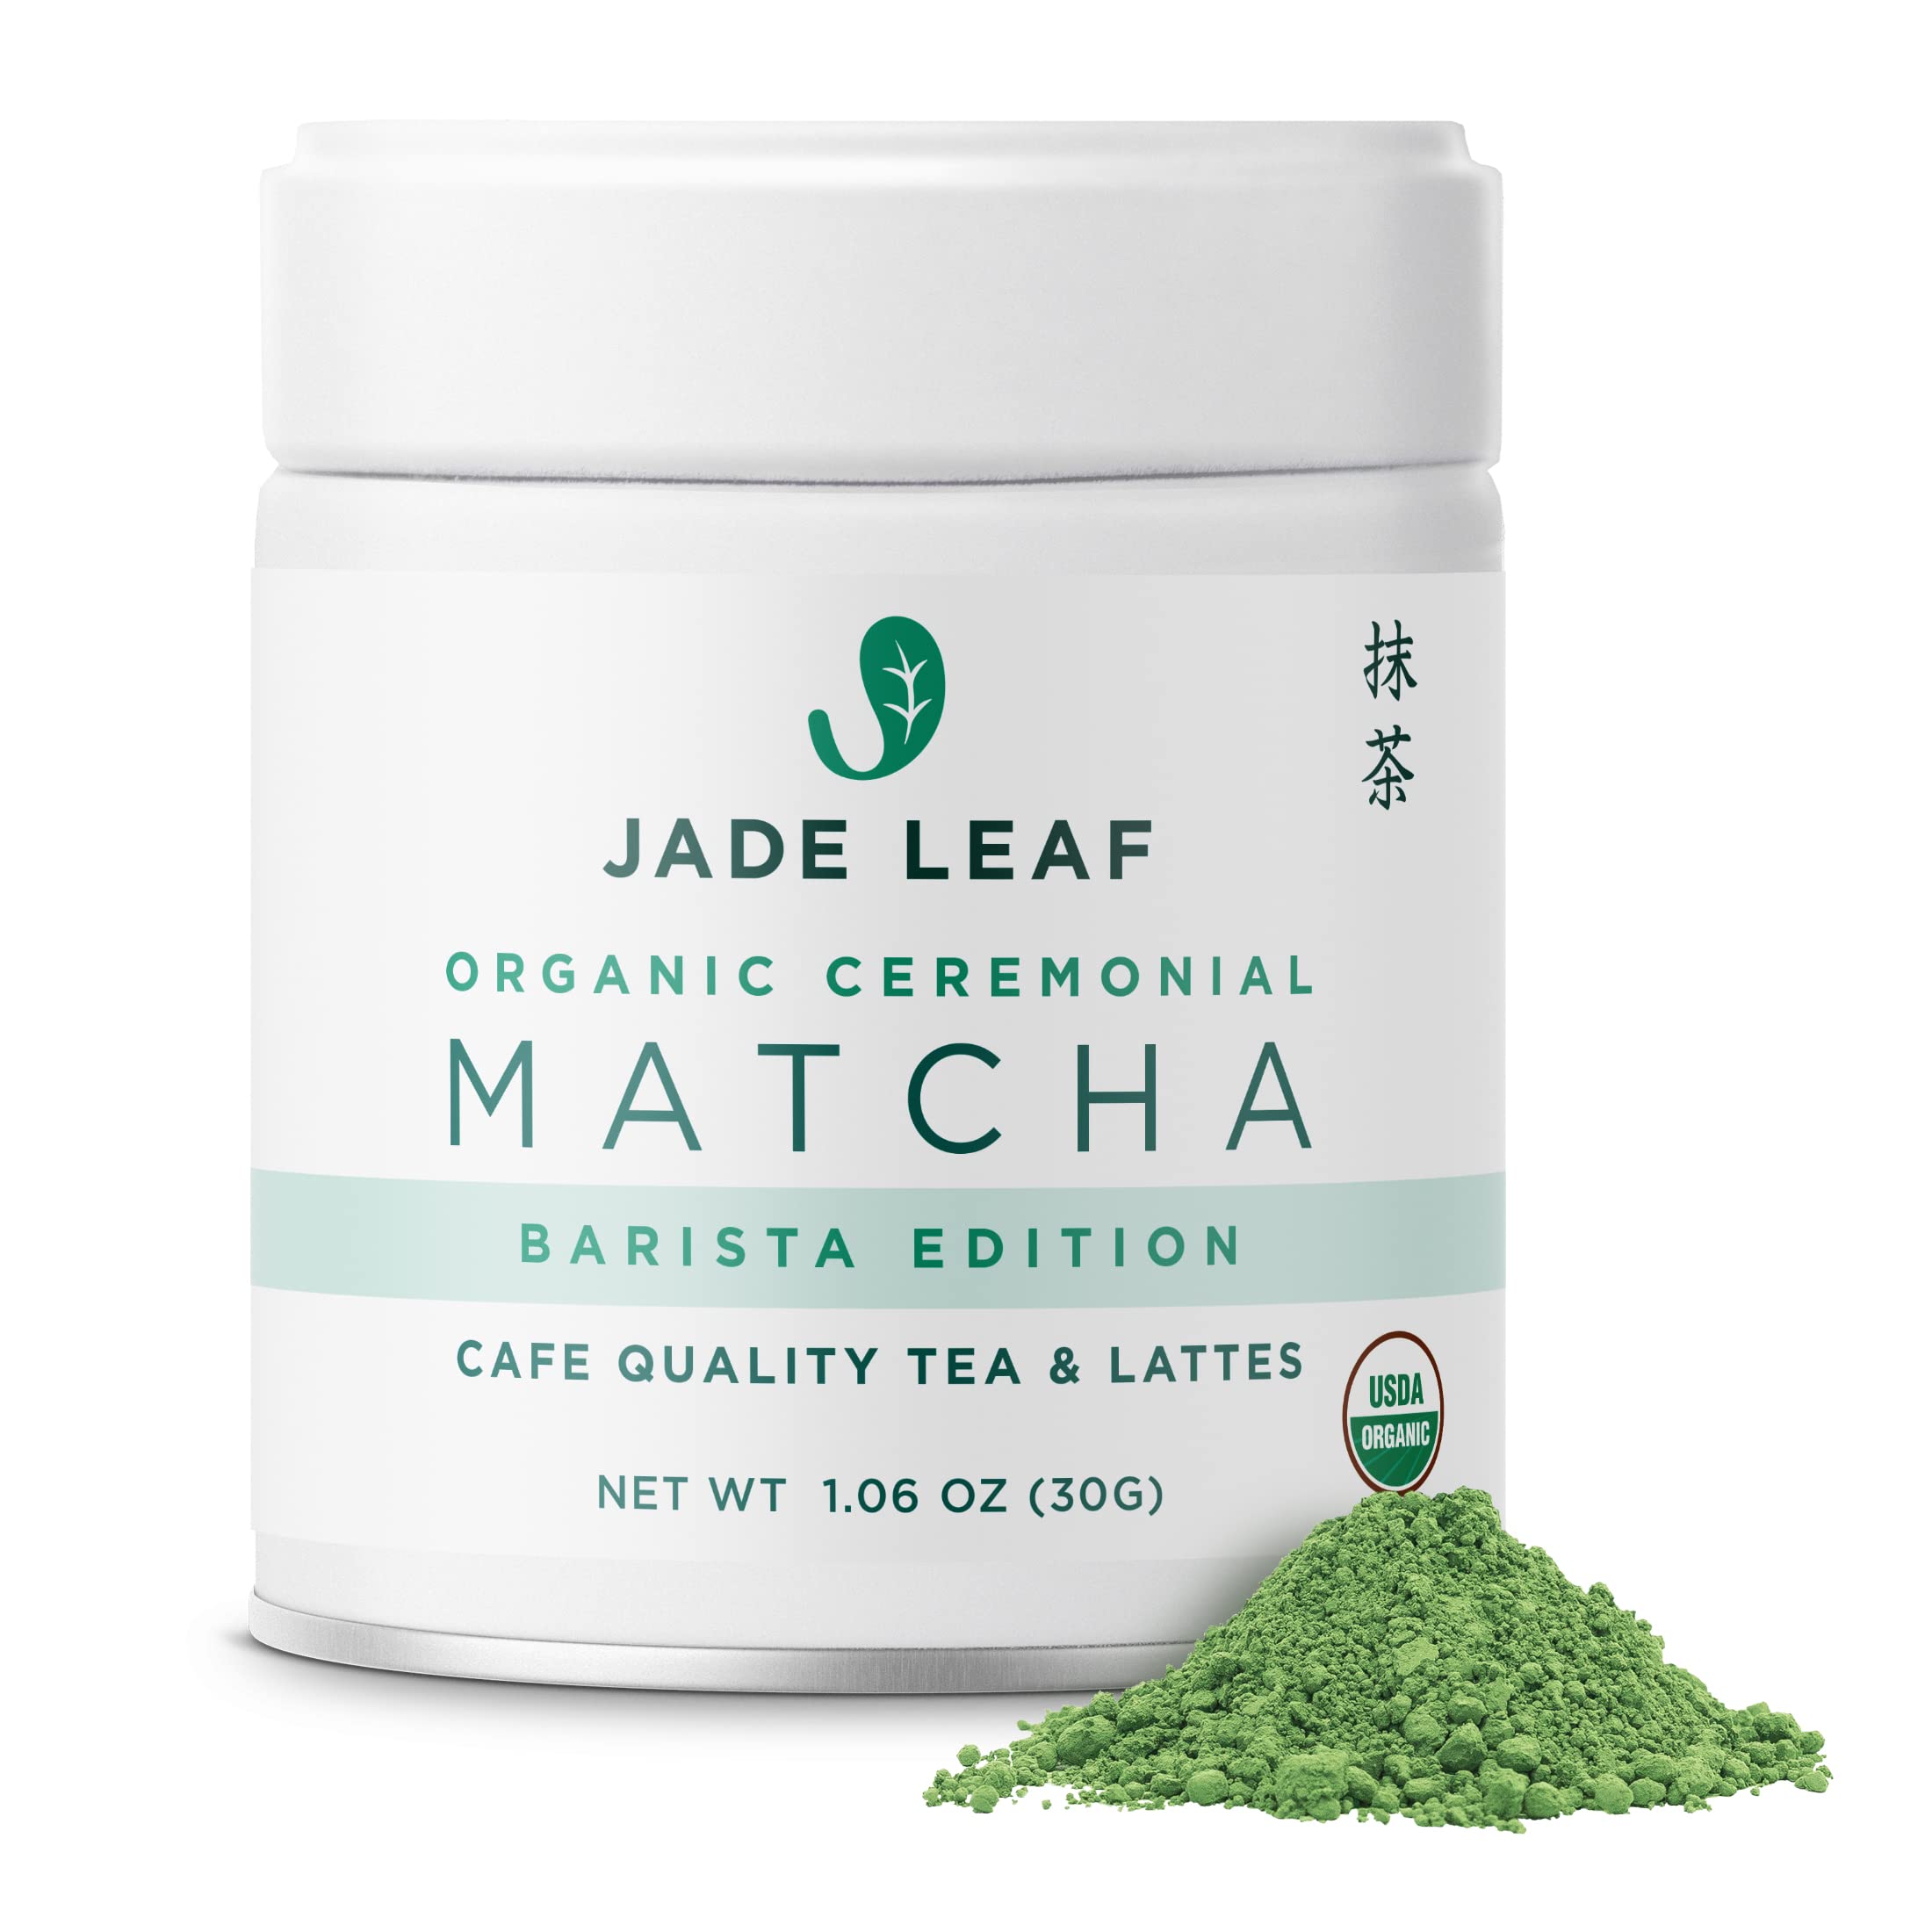 Jade Leaf Matcha Organic Ceremonial Grade Green Tea Powder - Barista Edition For Cafe Quality Tea & Lattes - Authentic Japanese 